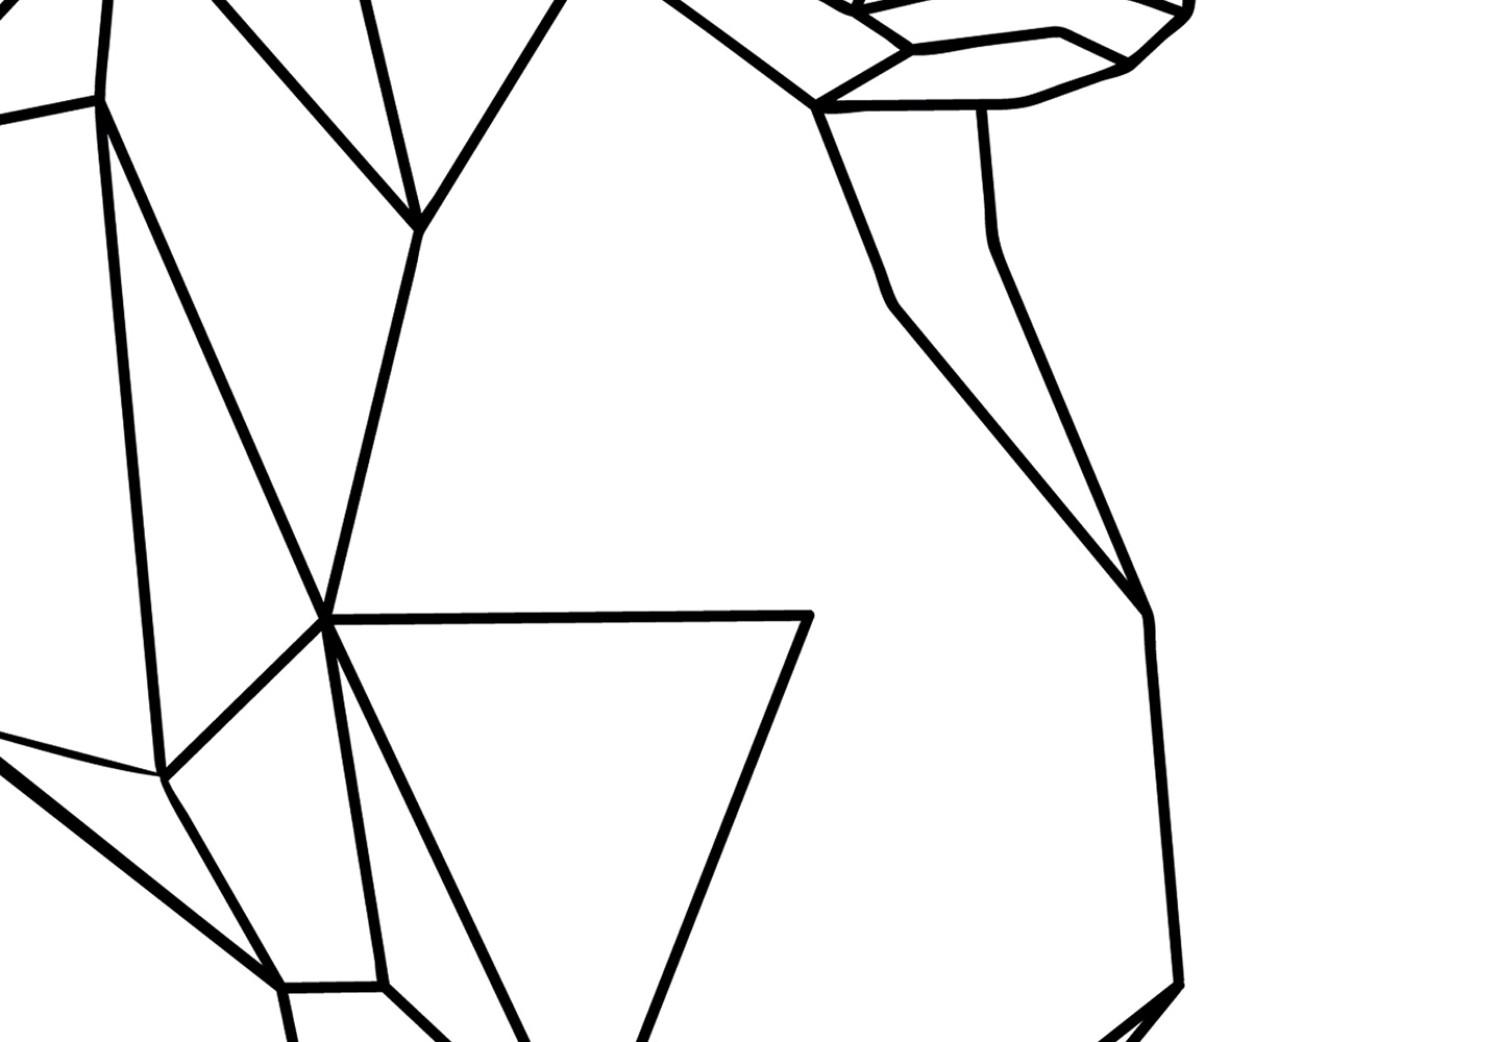 Set de poster Geometric Deer [Poster]